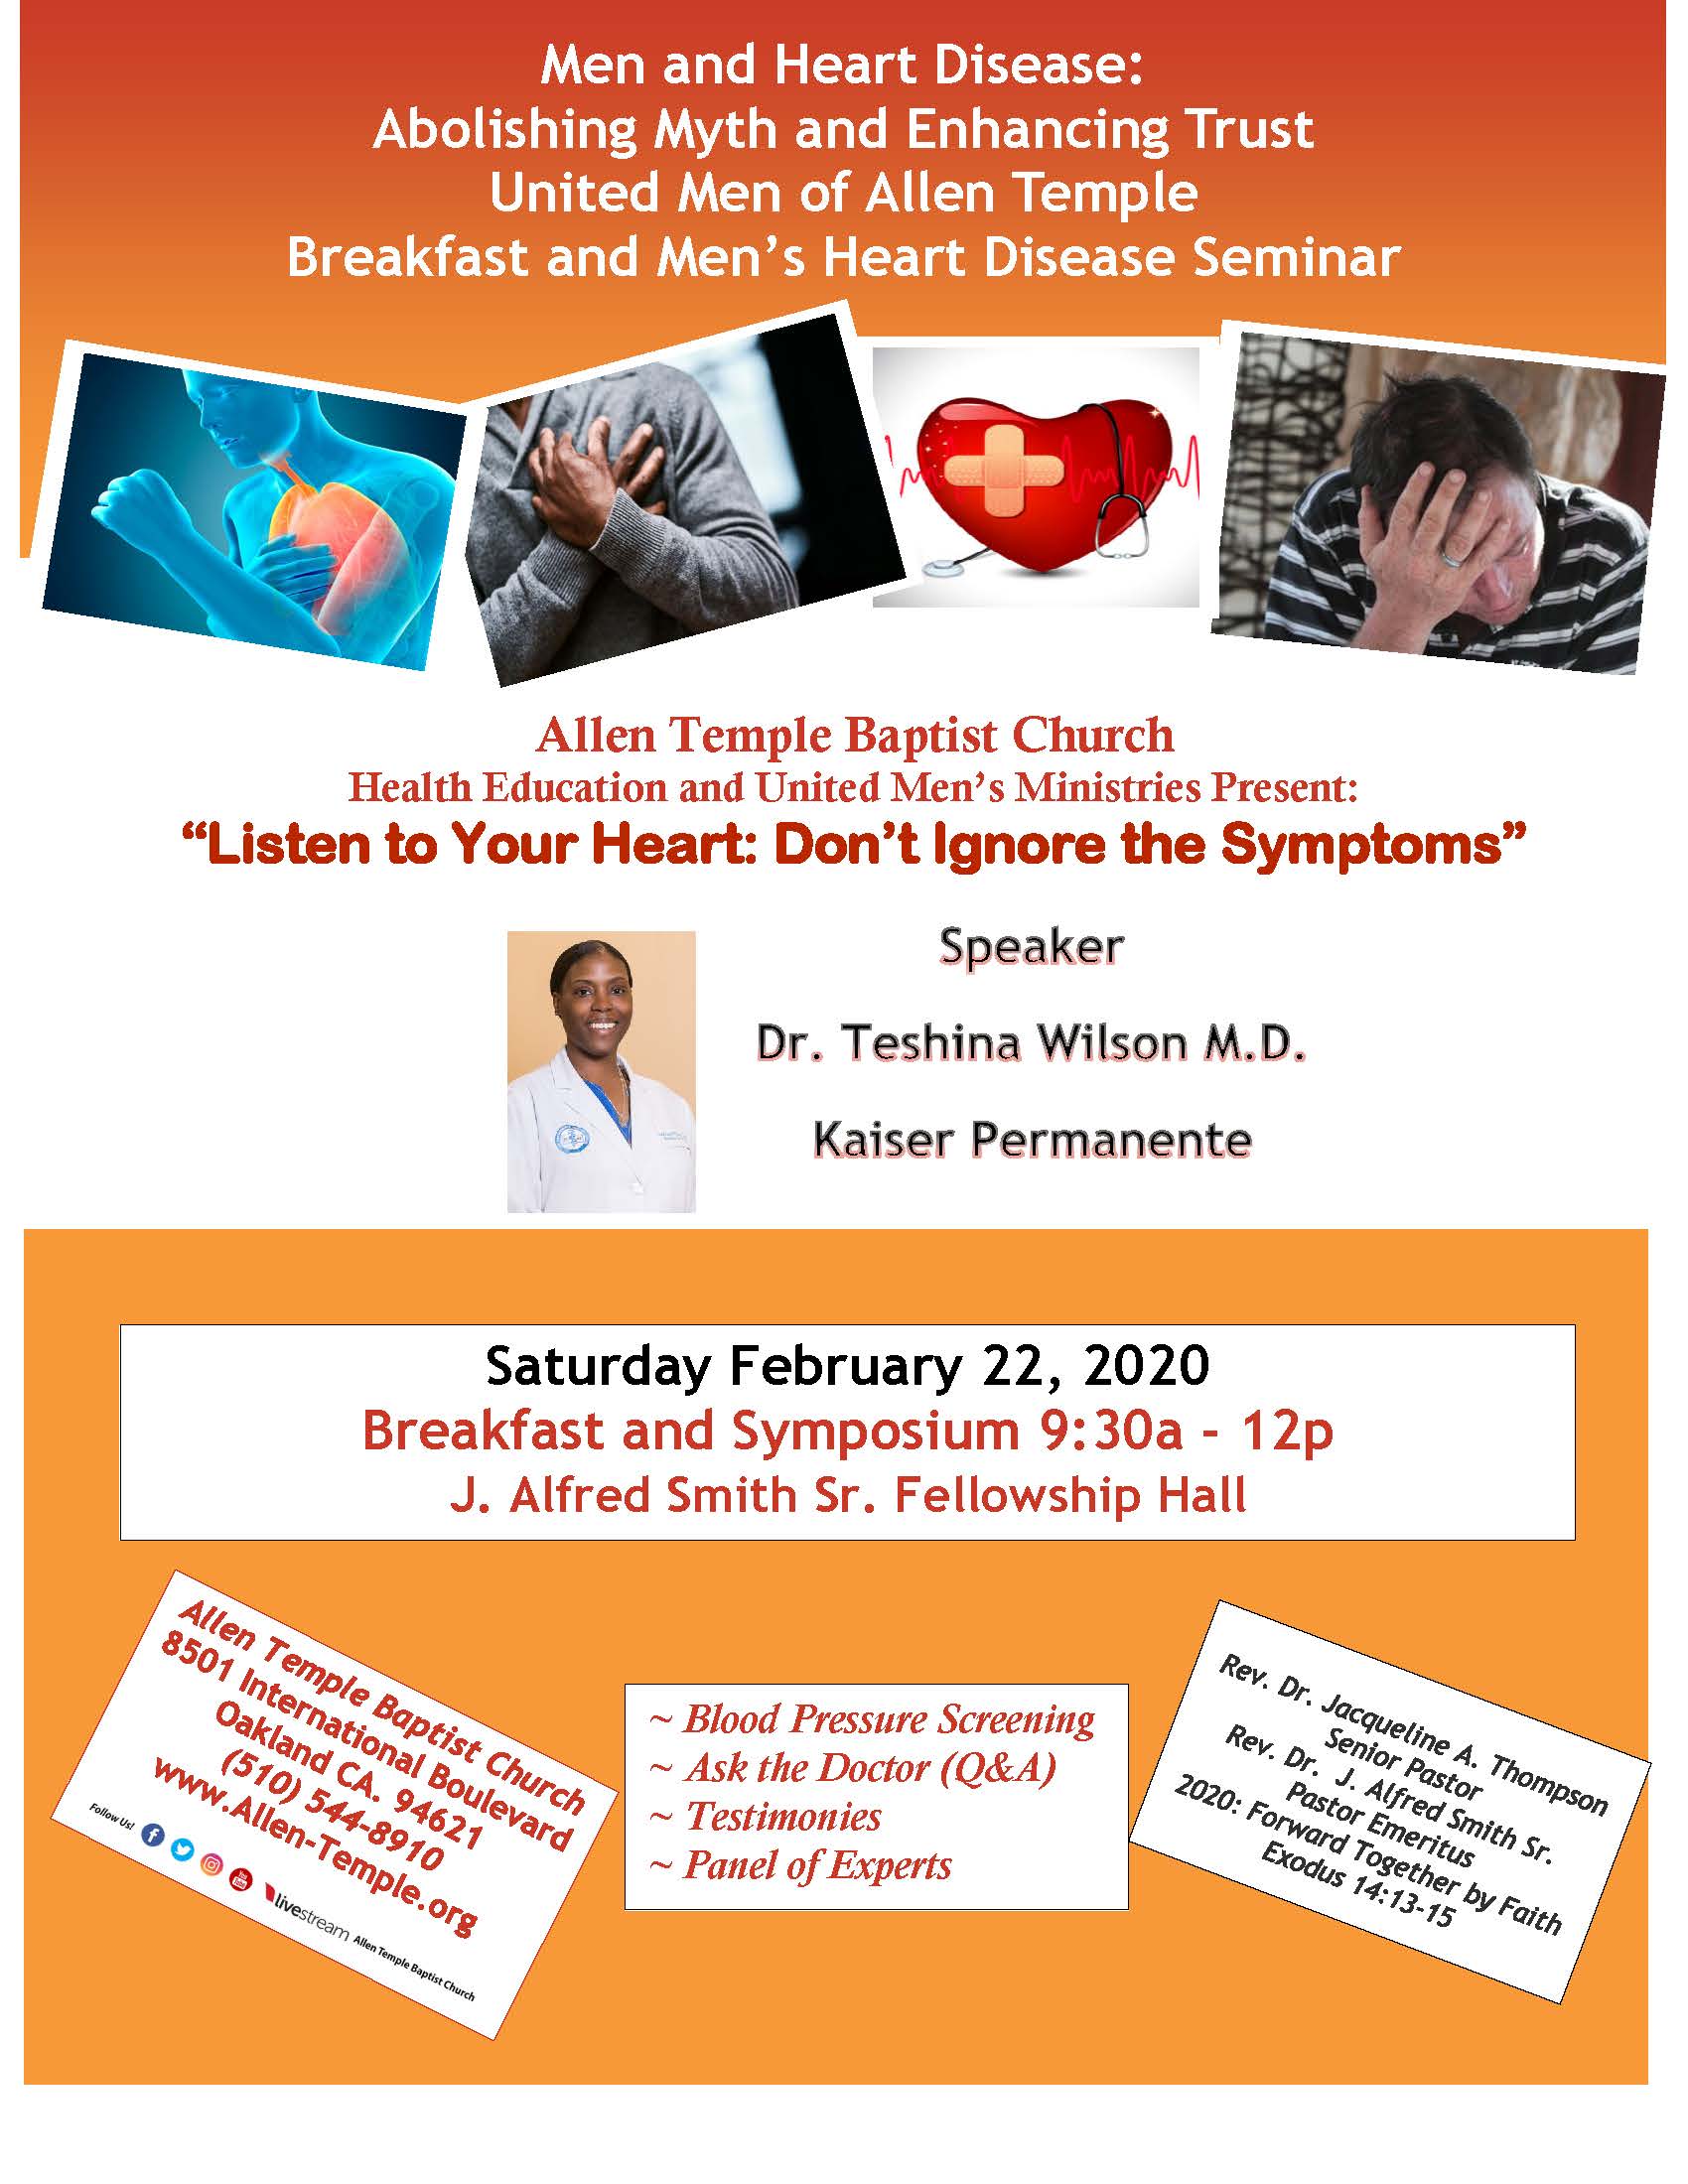 Heart Health Breakfast and Symposium Saturday, February 20, 2020